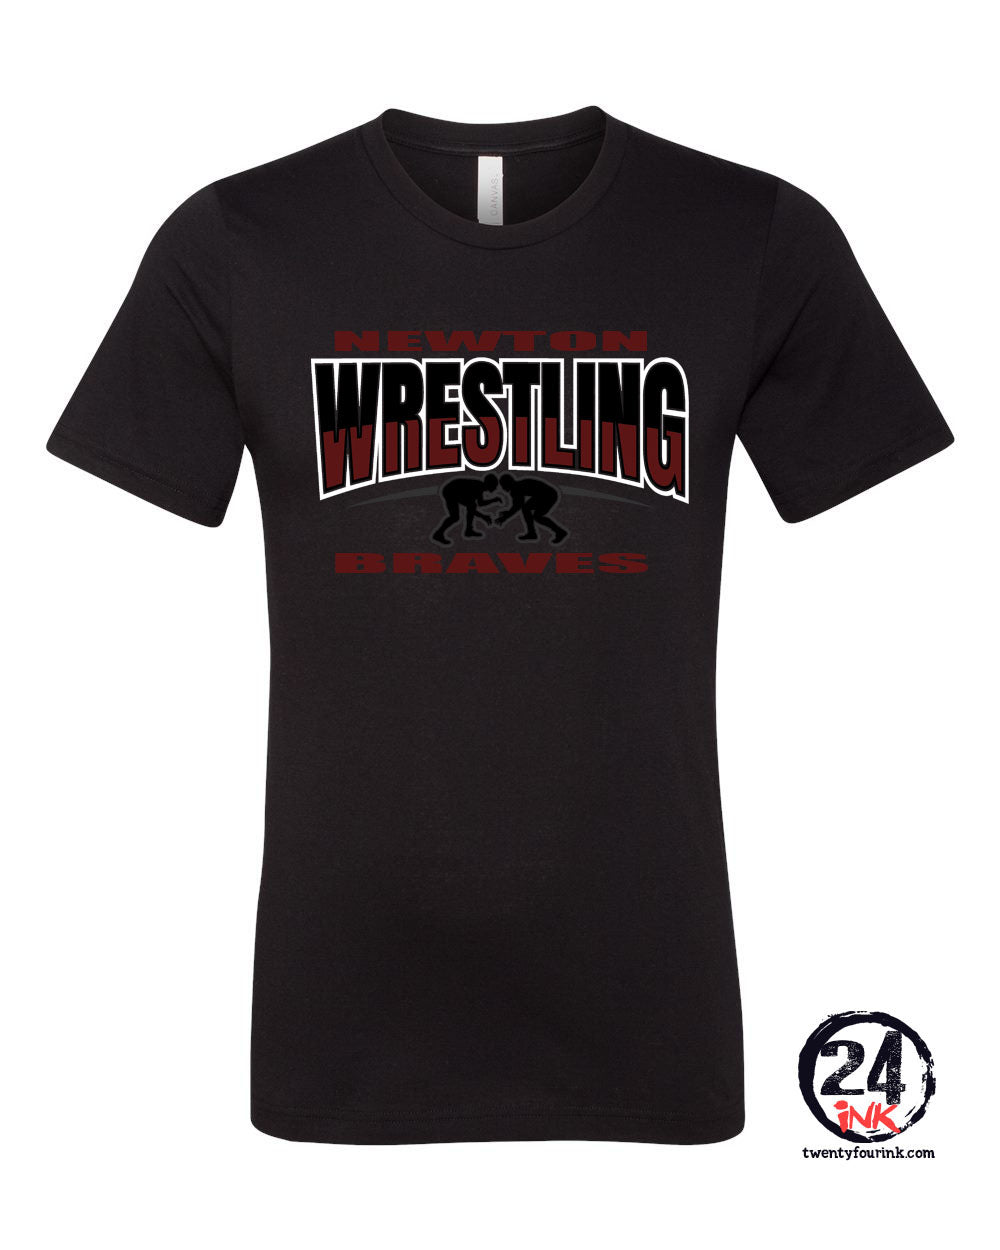 Newton wrestling design 3 T-Shirt